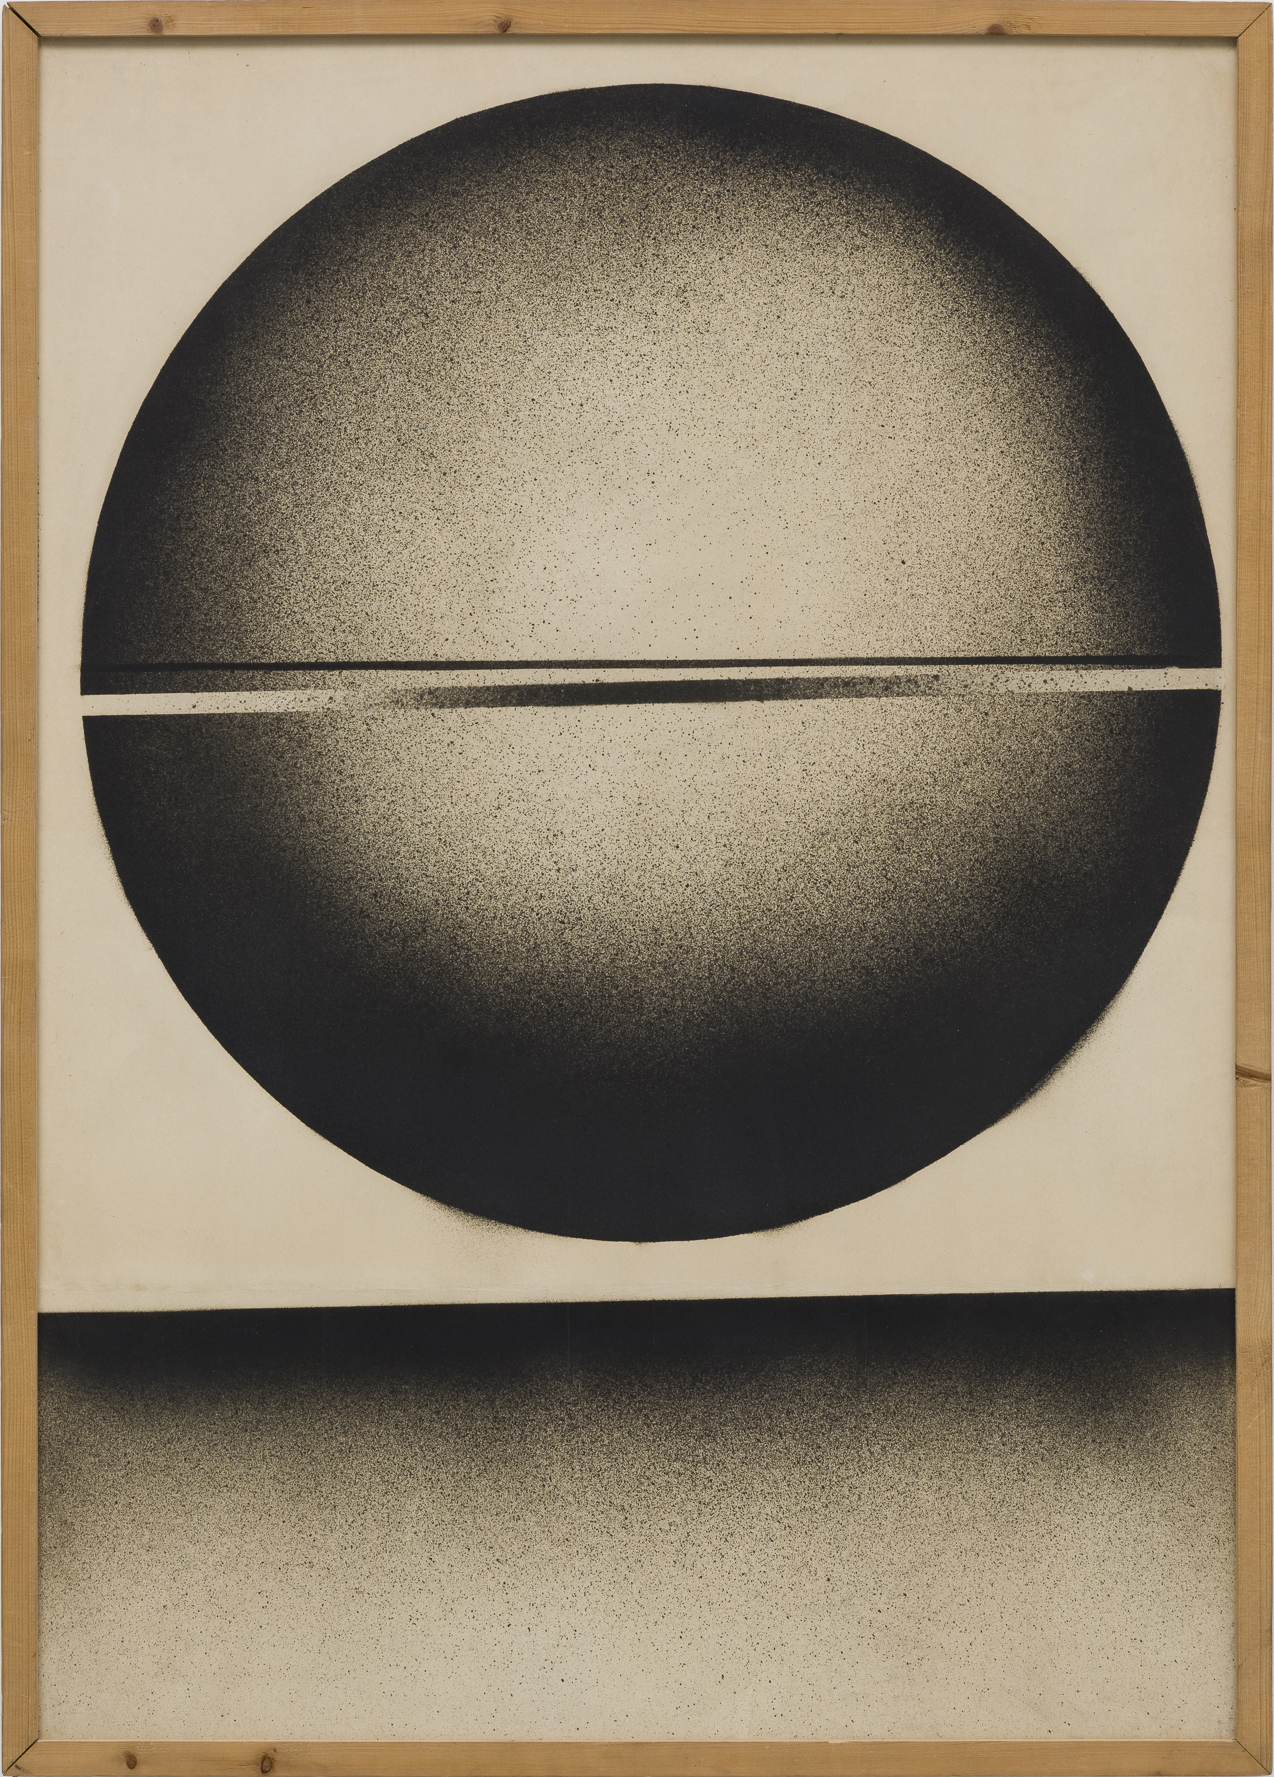 Ferenc Ficzek, Untitled (Sphere), 1969-1970, ink, printing ink, spray on paper, 98 x 70 cm. Photo: Marcus Schneider